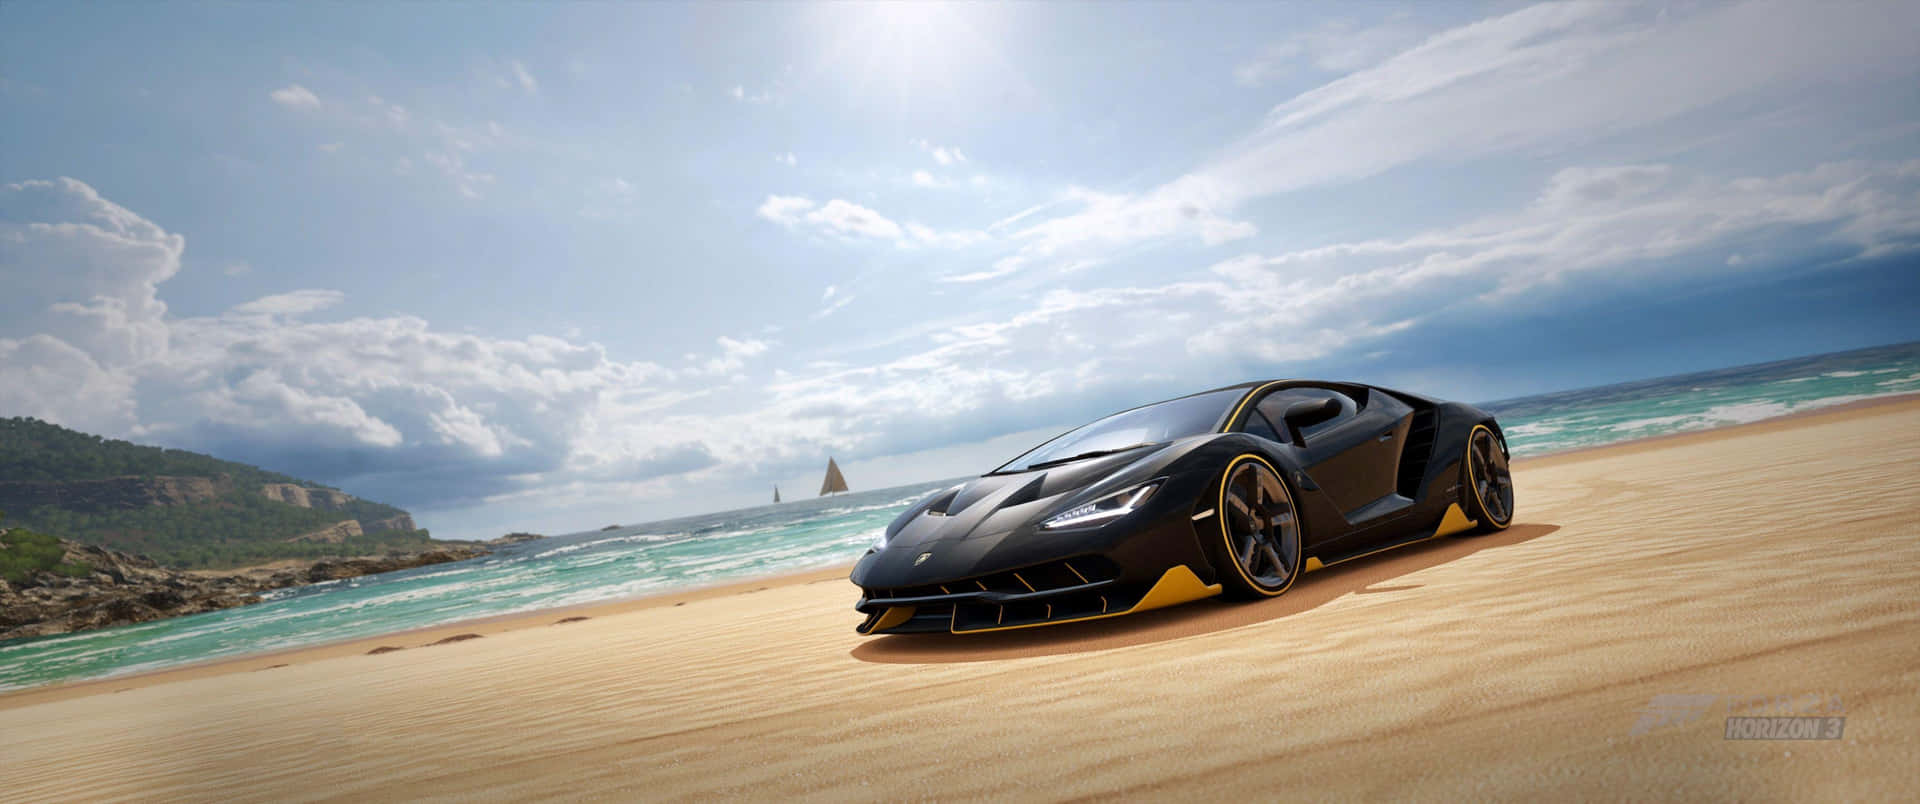 Lamborghini By The Beach Forza Horizon 4 HD Wallpaper